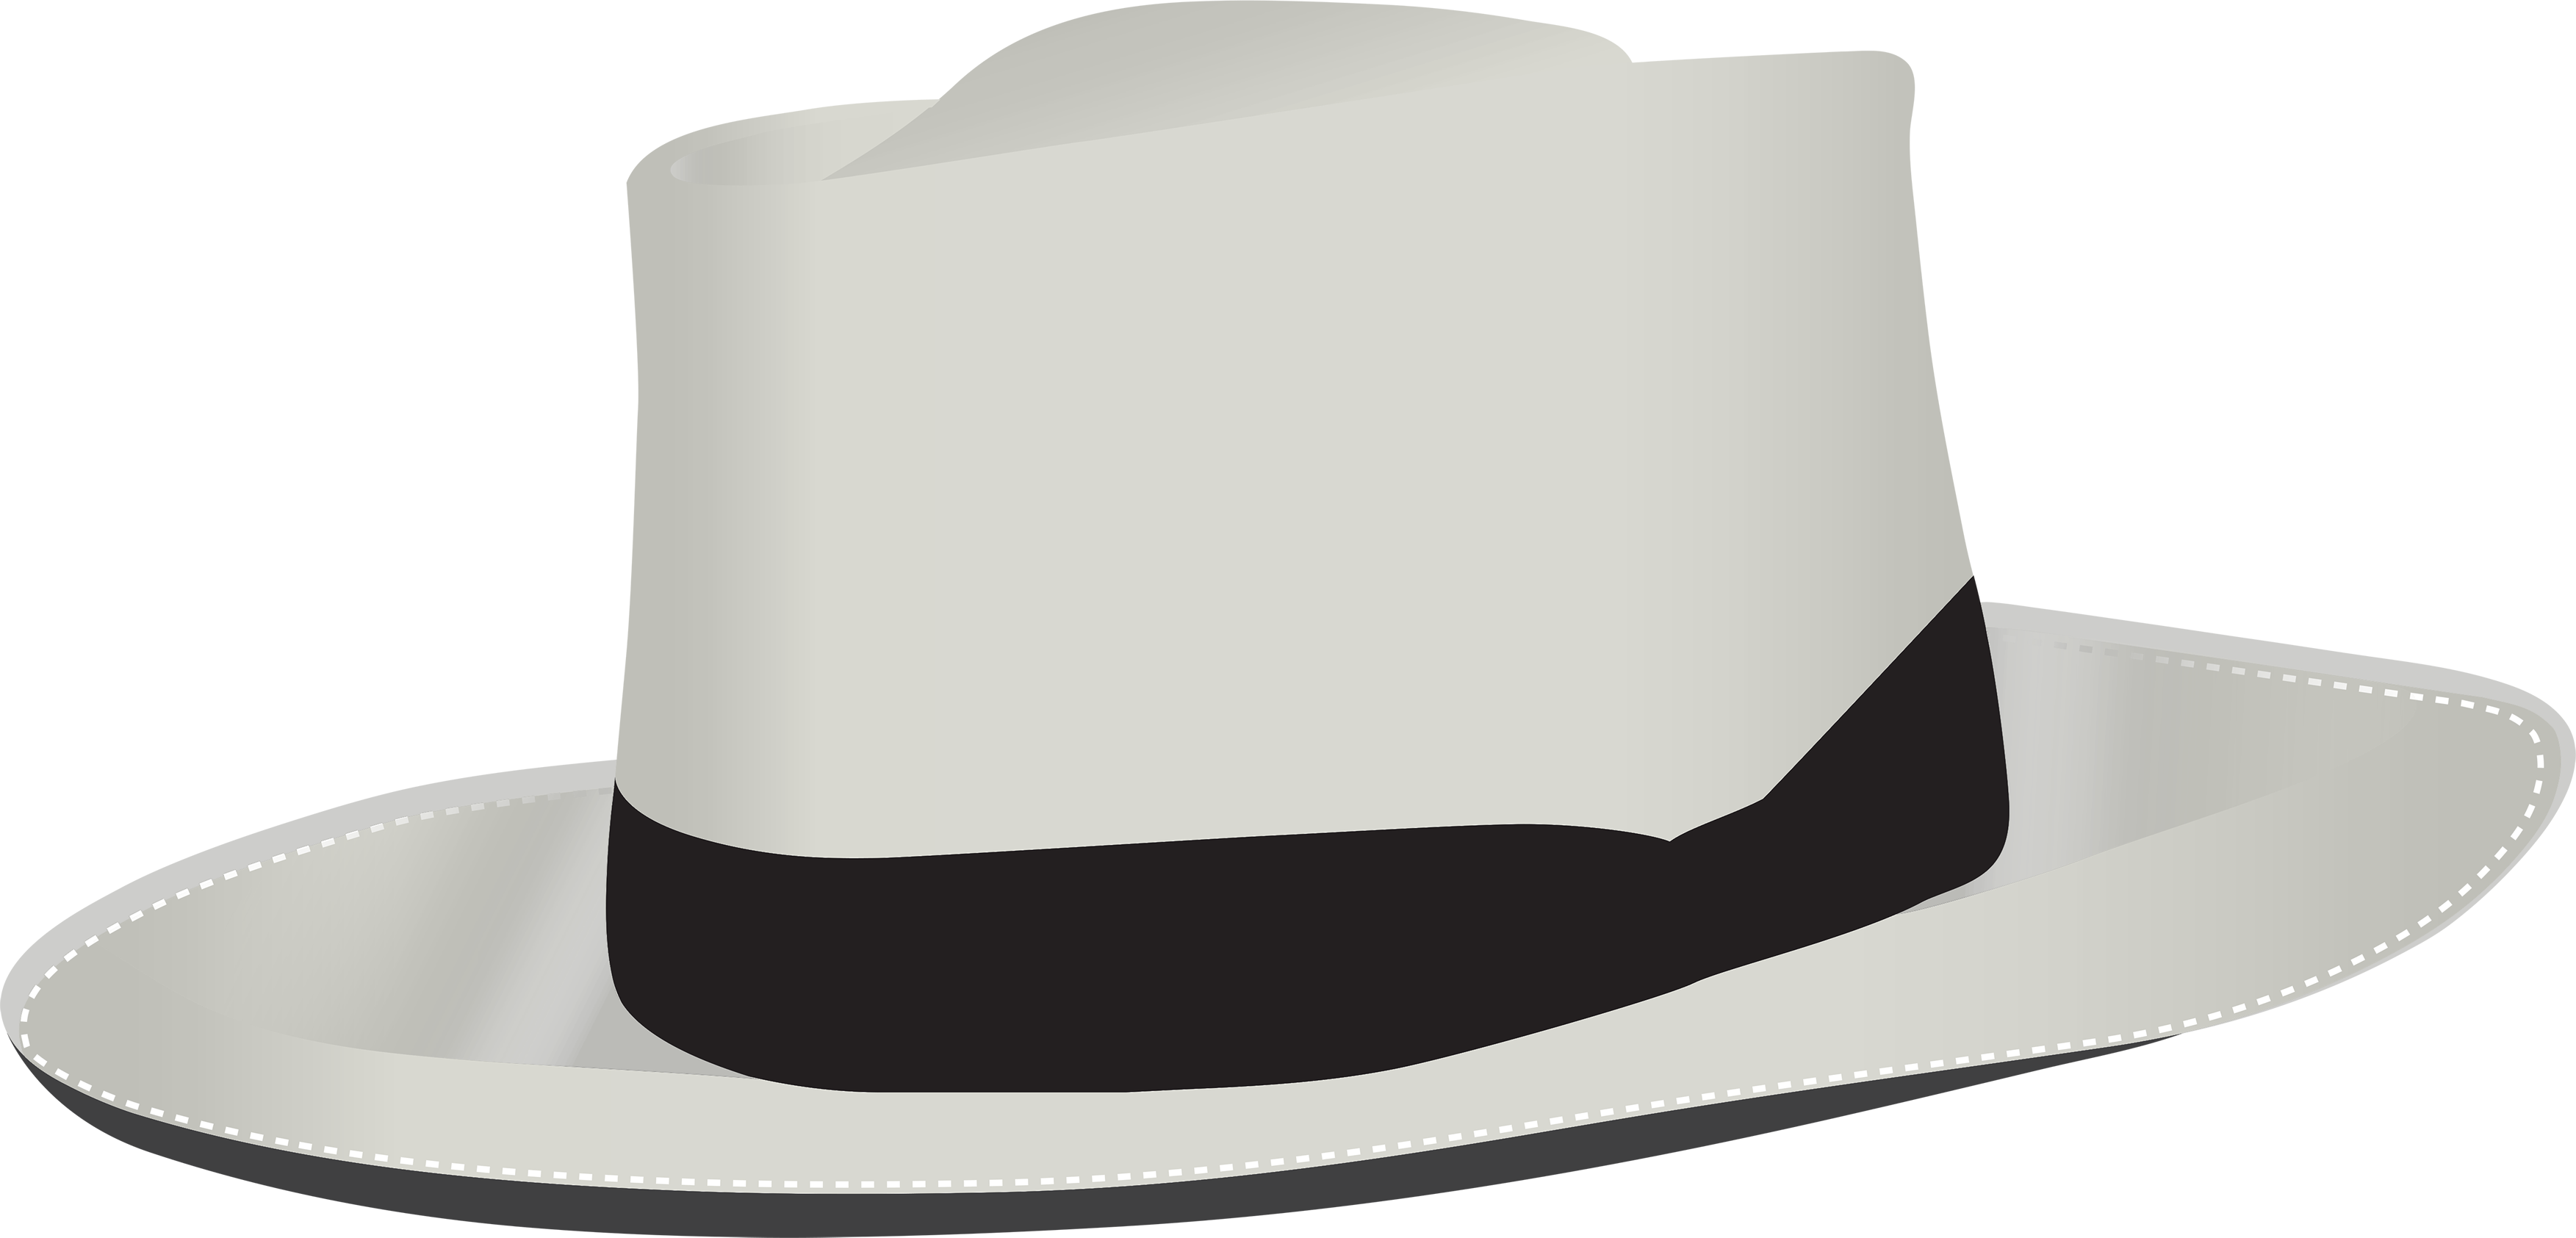 Download PNG image - White Hat Transparent PNG 